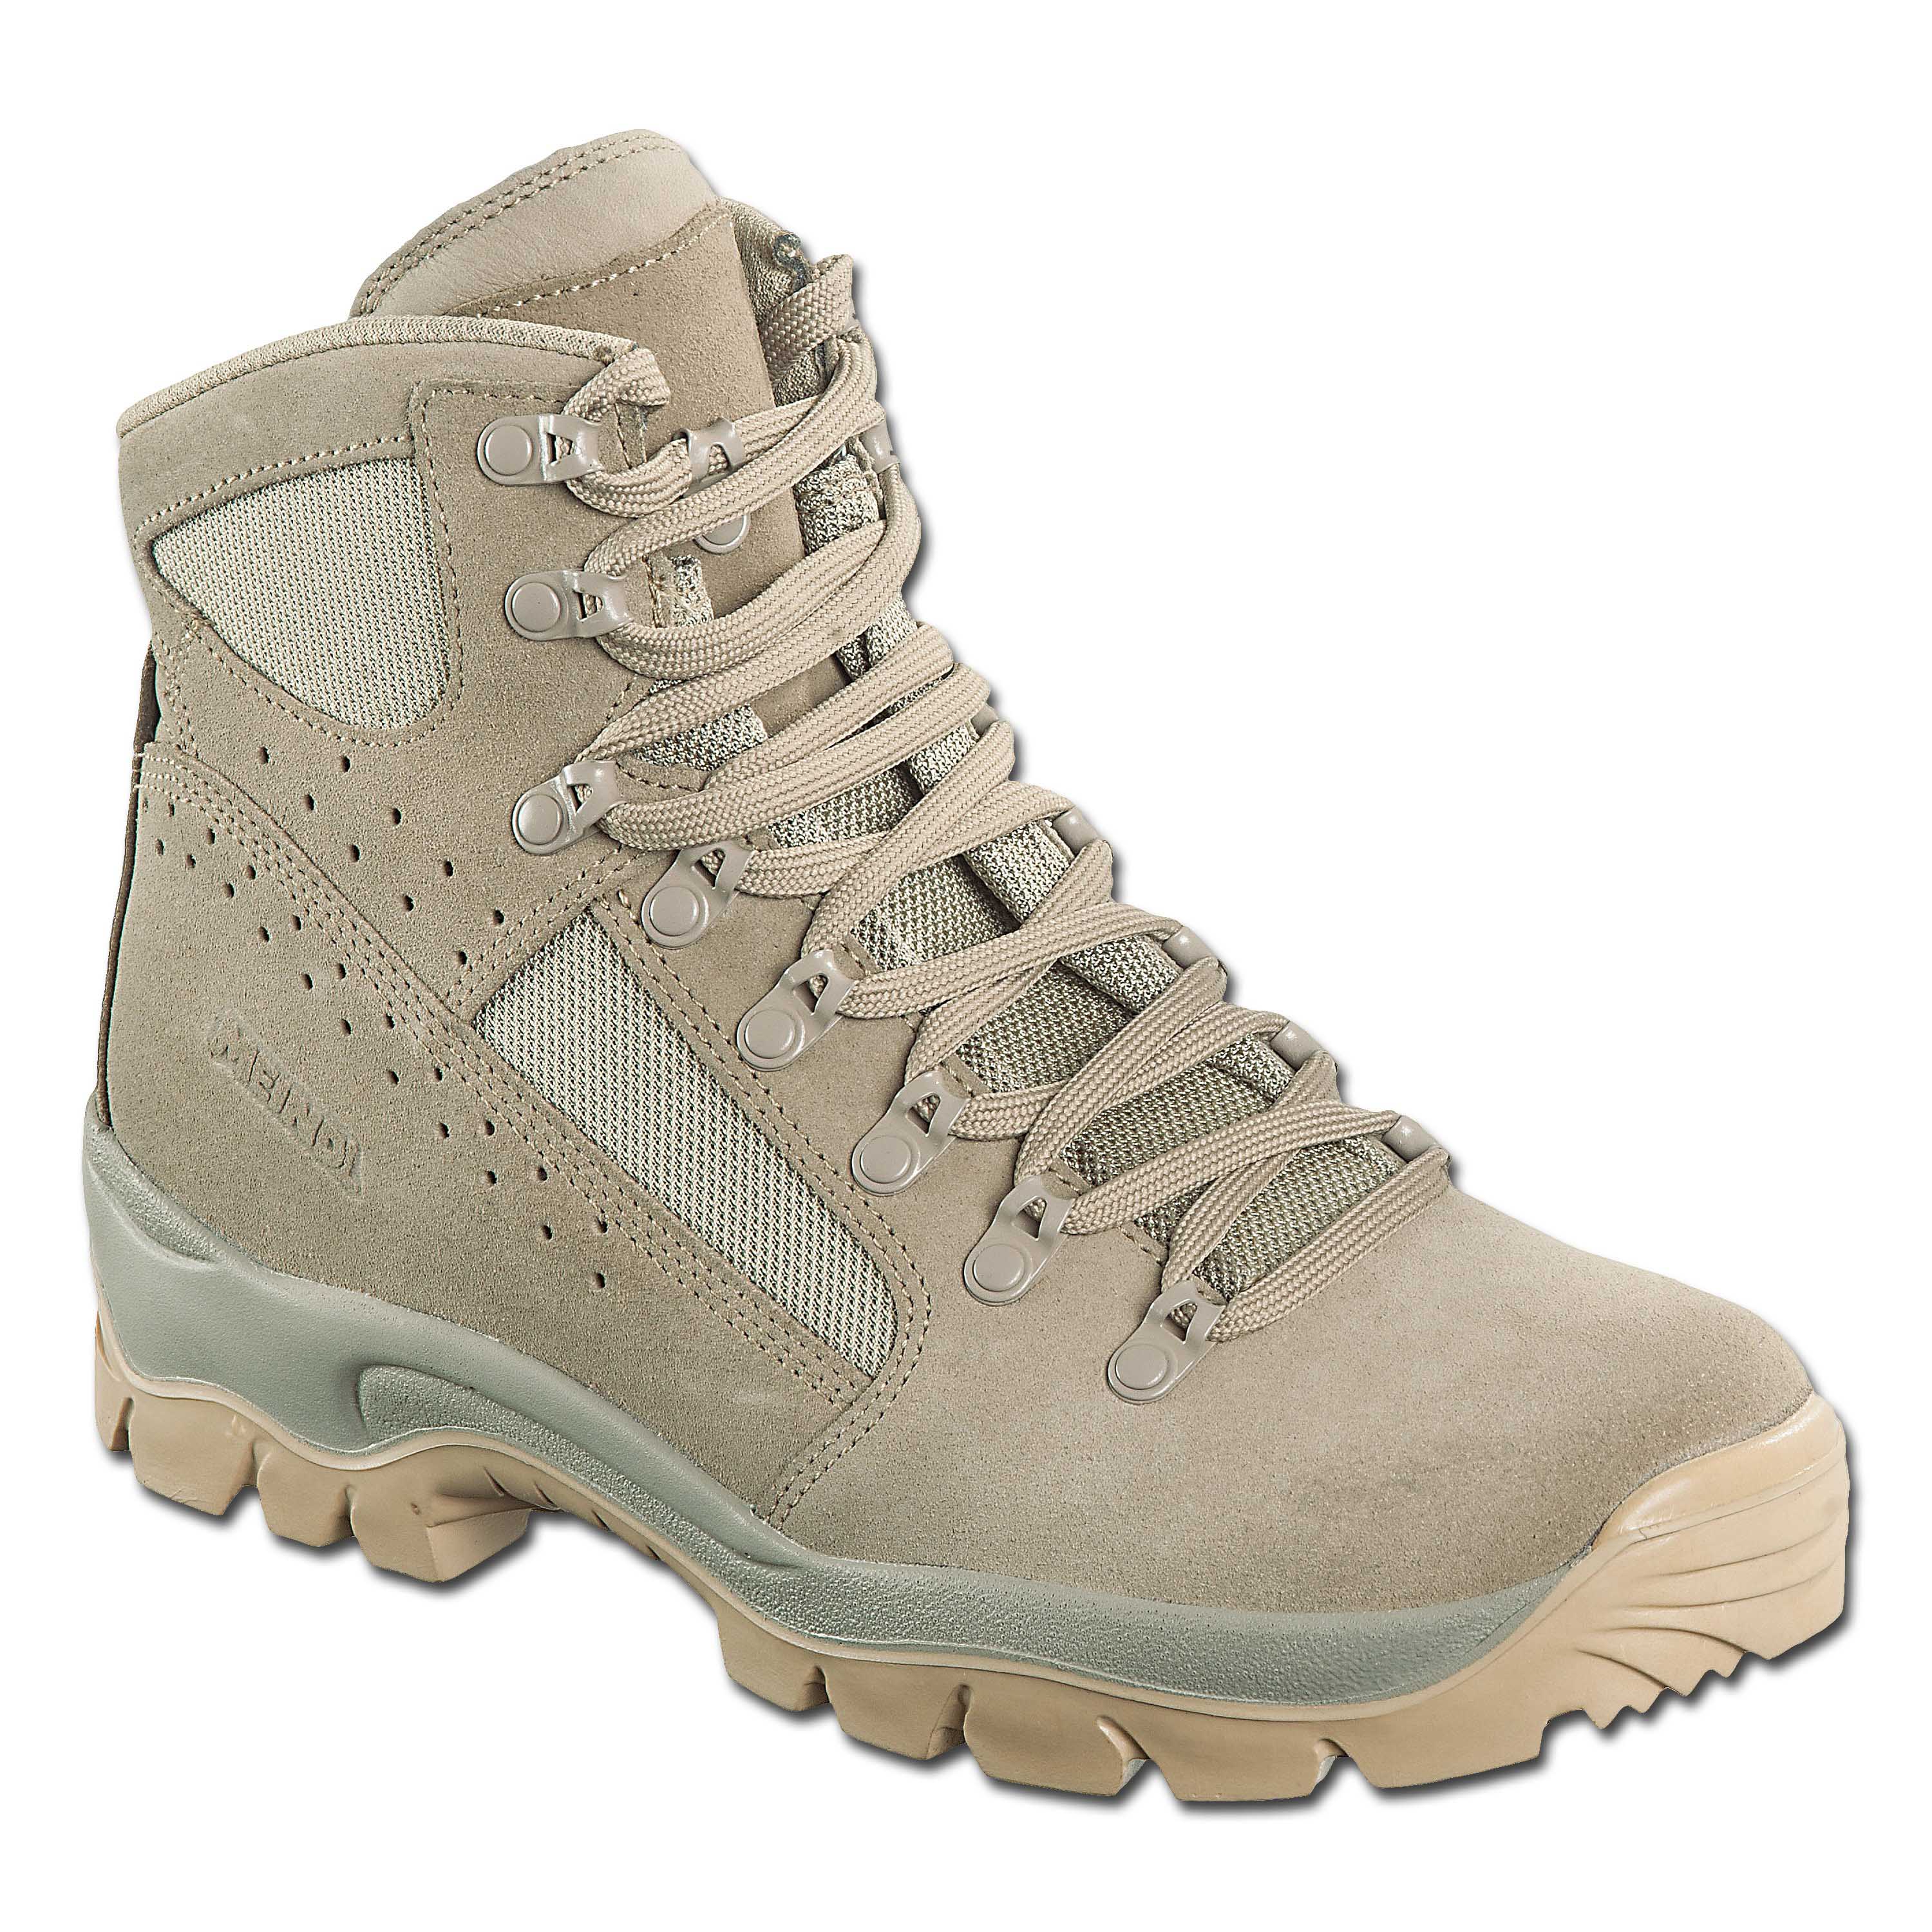 Meindl Safari - Hiking boots - Men's